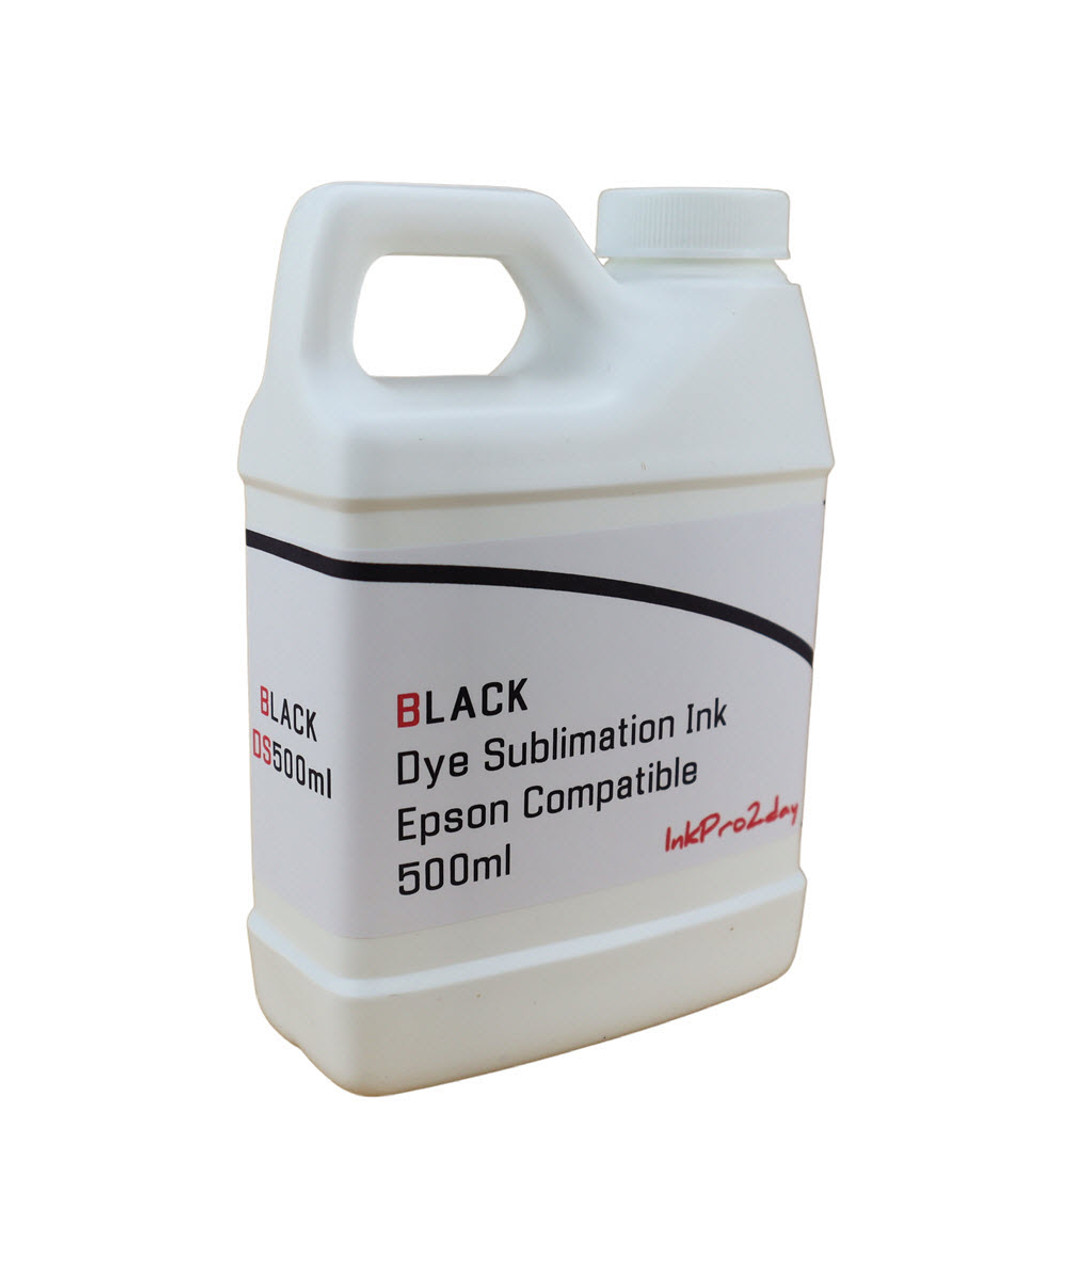 Black 500ml bottle Dye Sublimation Ink for Epson WorkForce WF-3540, WorkForce WF-7010, WorkForce WF-7510, WorkForce WF-7520 Printers